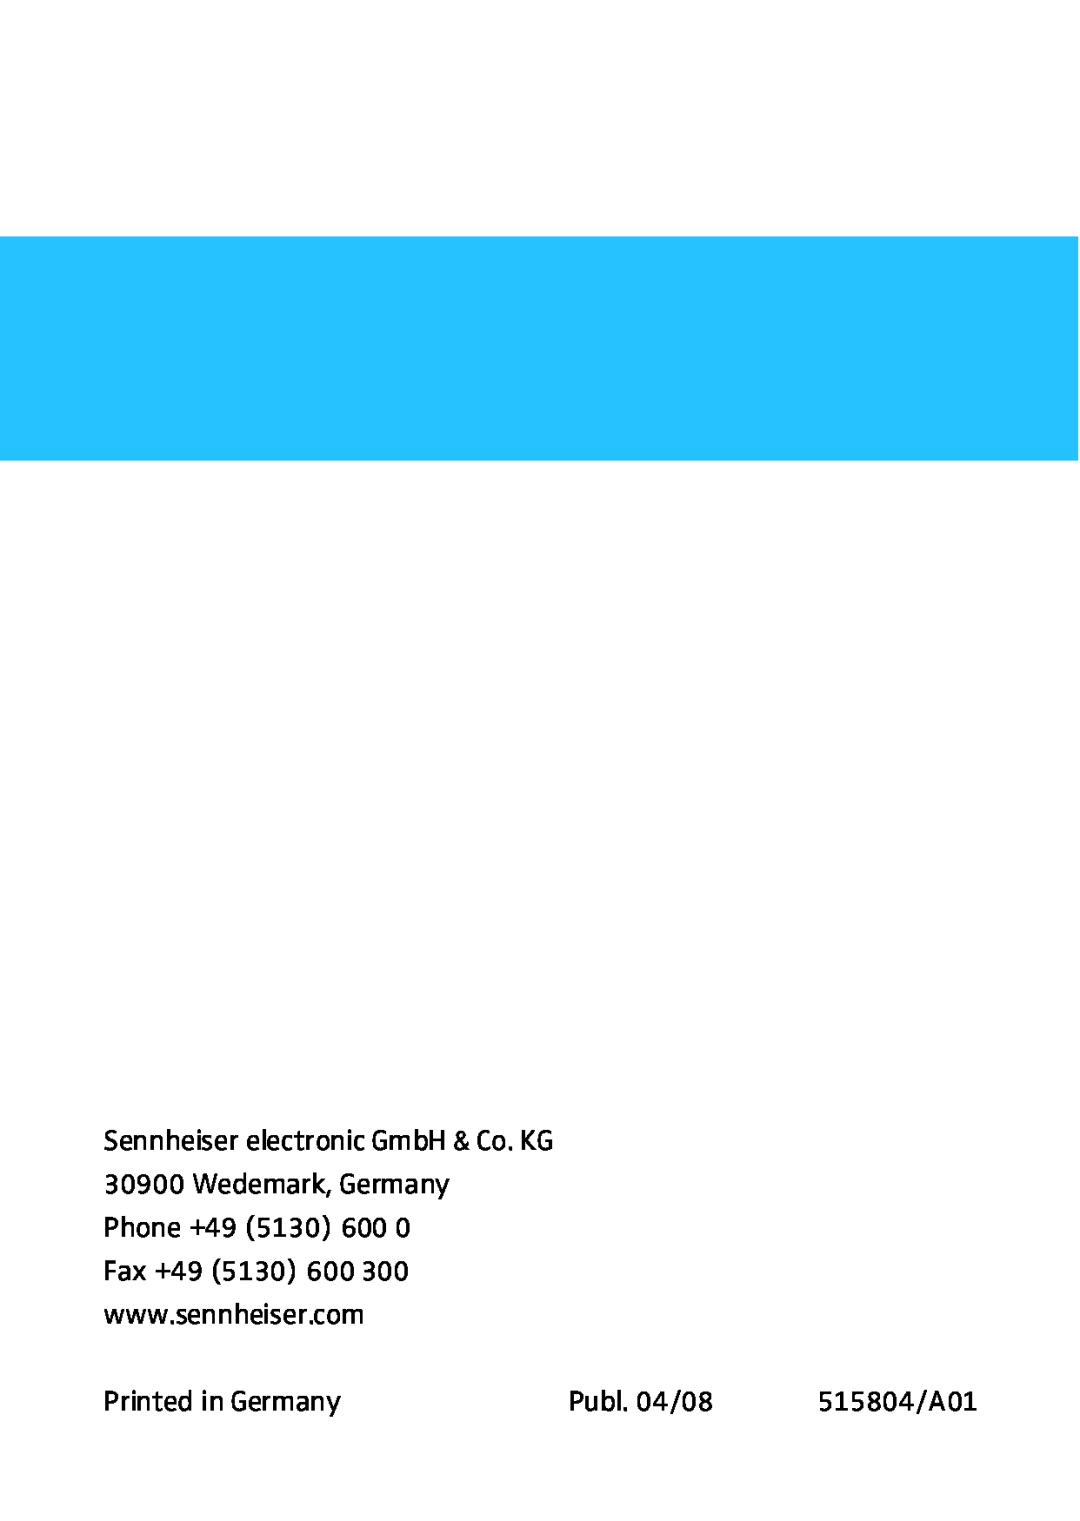 Sennheiser HD HME 46 manual Printed in Germany, Publ. 04/08, 515804/A01 